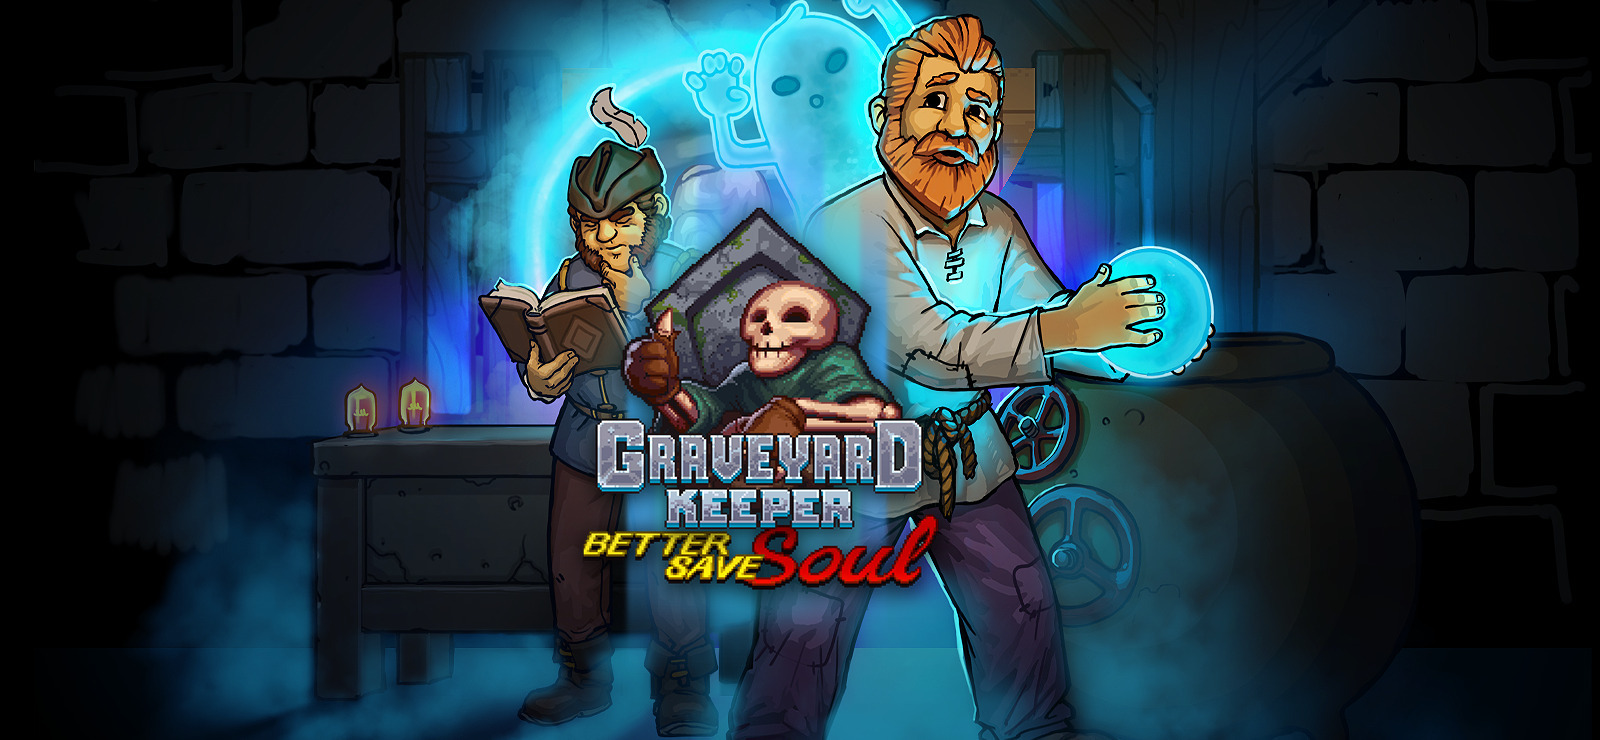 graveyard keeper better save soul wiki